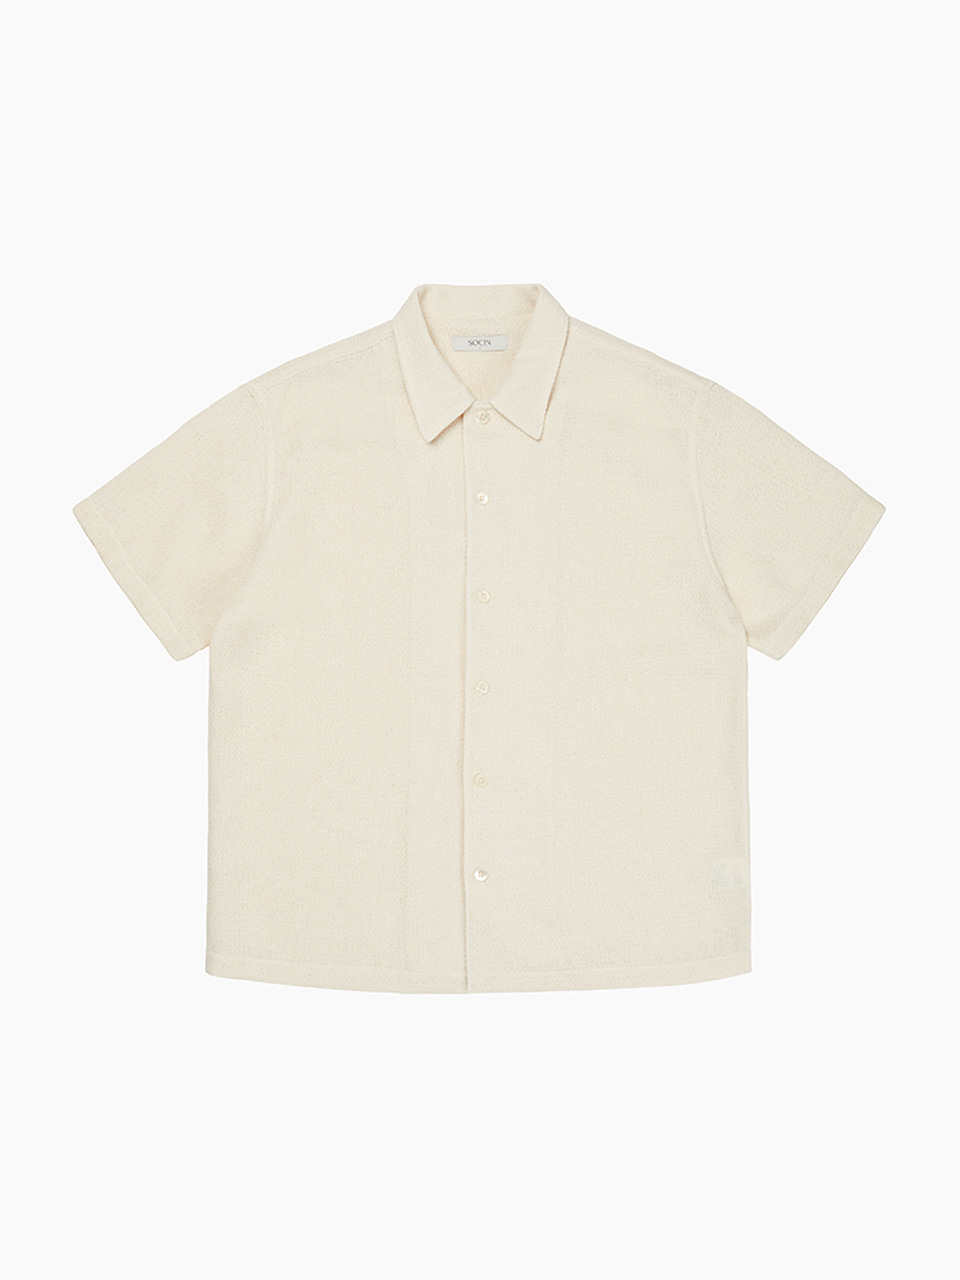 Wicker Weave Half Shirts (Ivory)